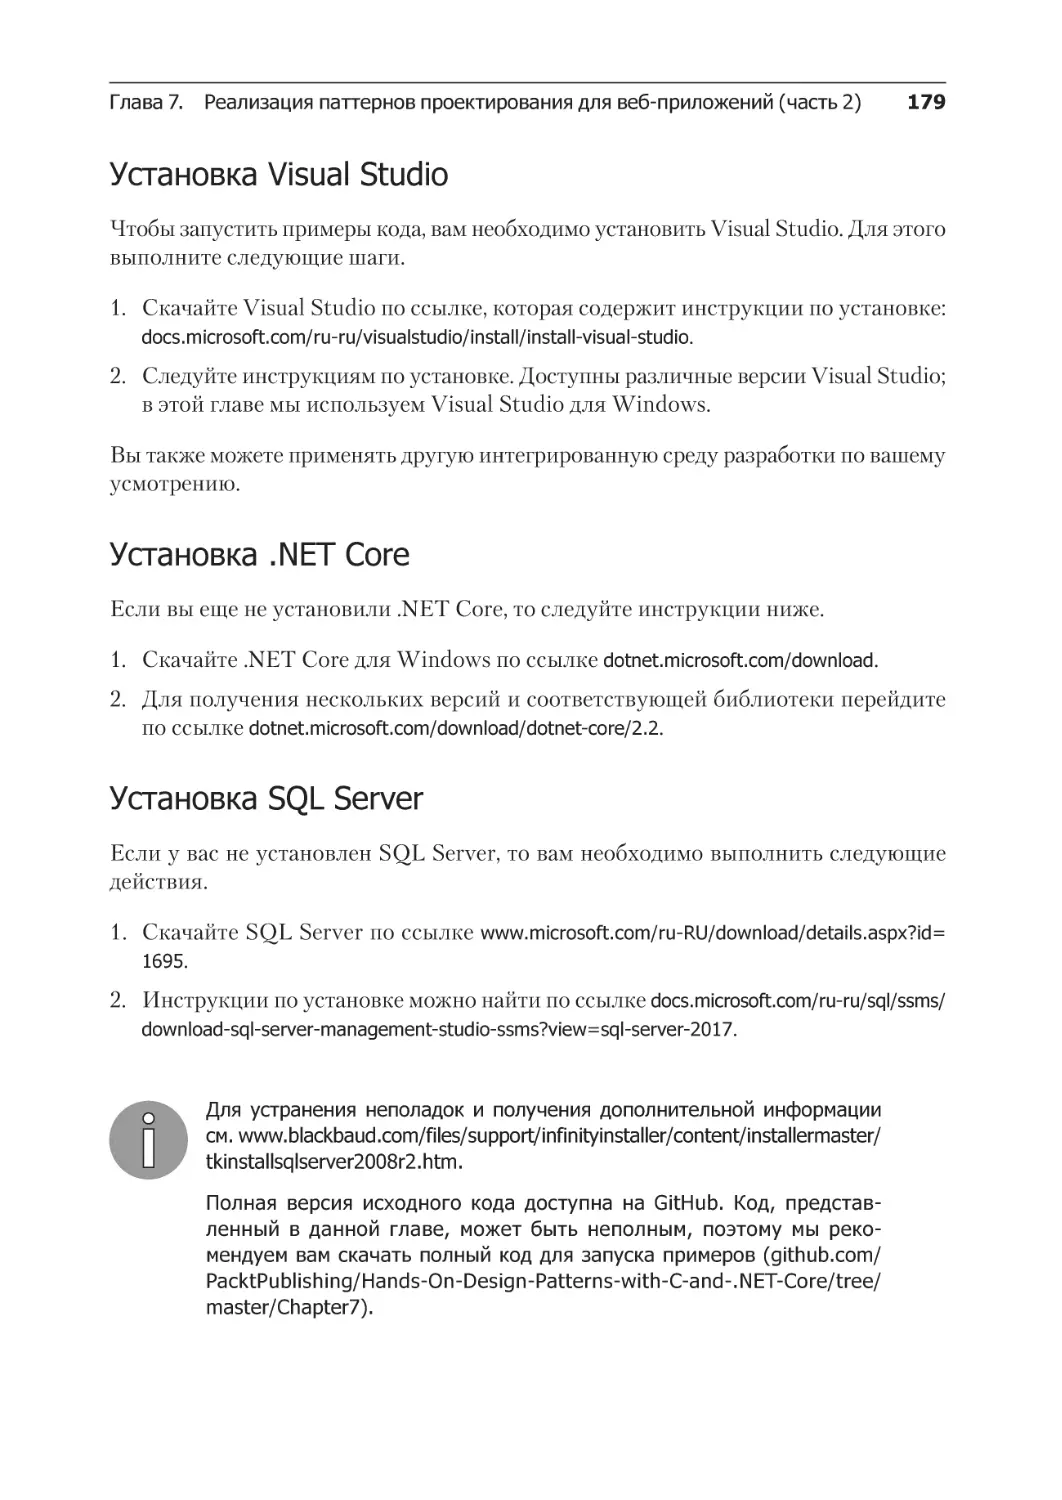 Установка Visual Studio
Установка .NET Core
Установка SQL Server